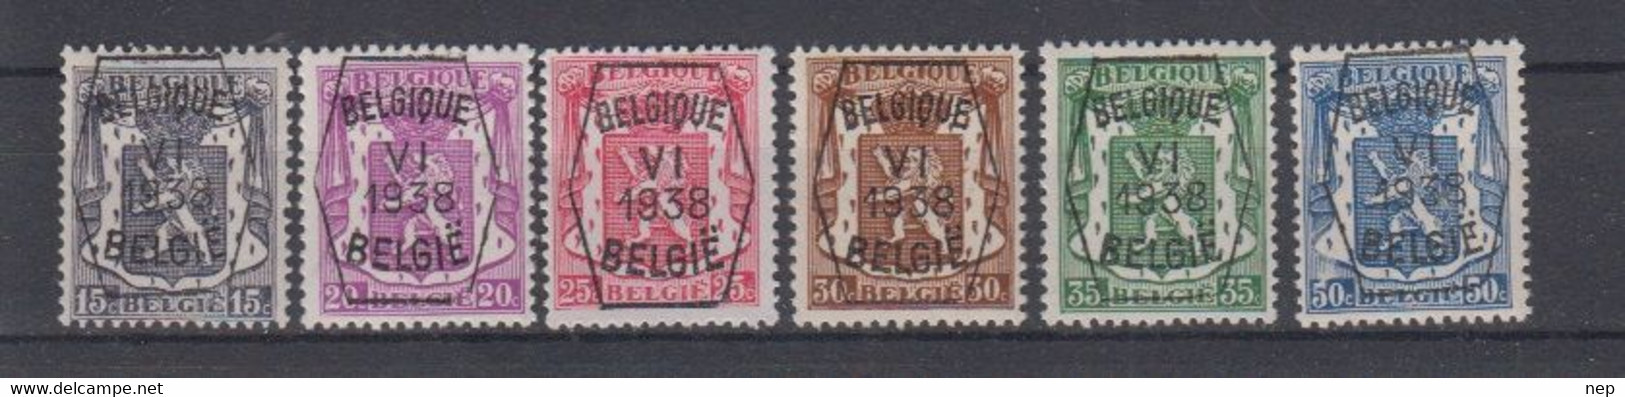 BELGIË - OBP - 1938 - PRE 363/68 (6 Type A) - MNH** - Typos 1936-51 (Petit Sceau)